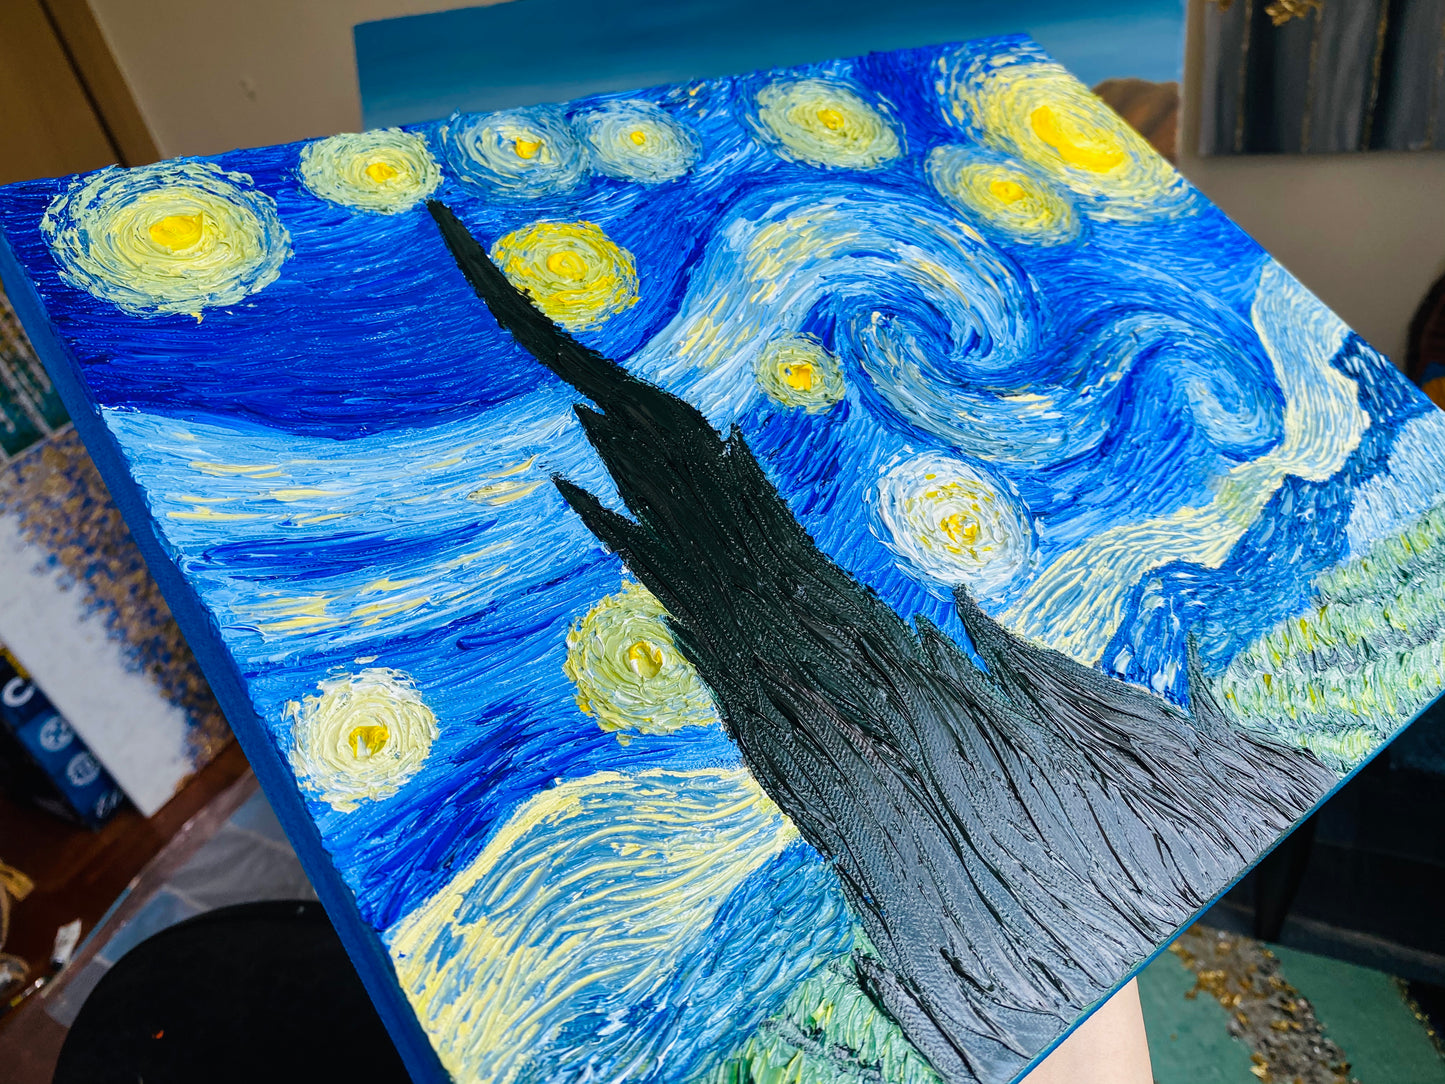 “Van Gogh Inspired Starry Nights”